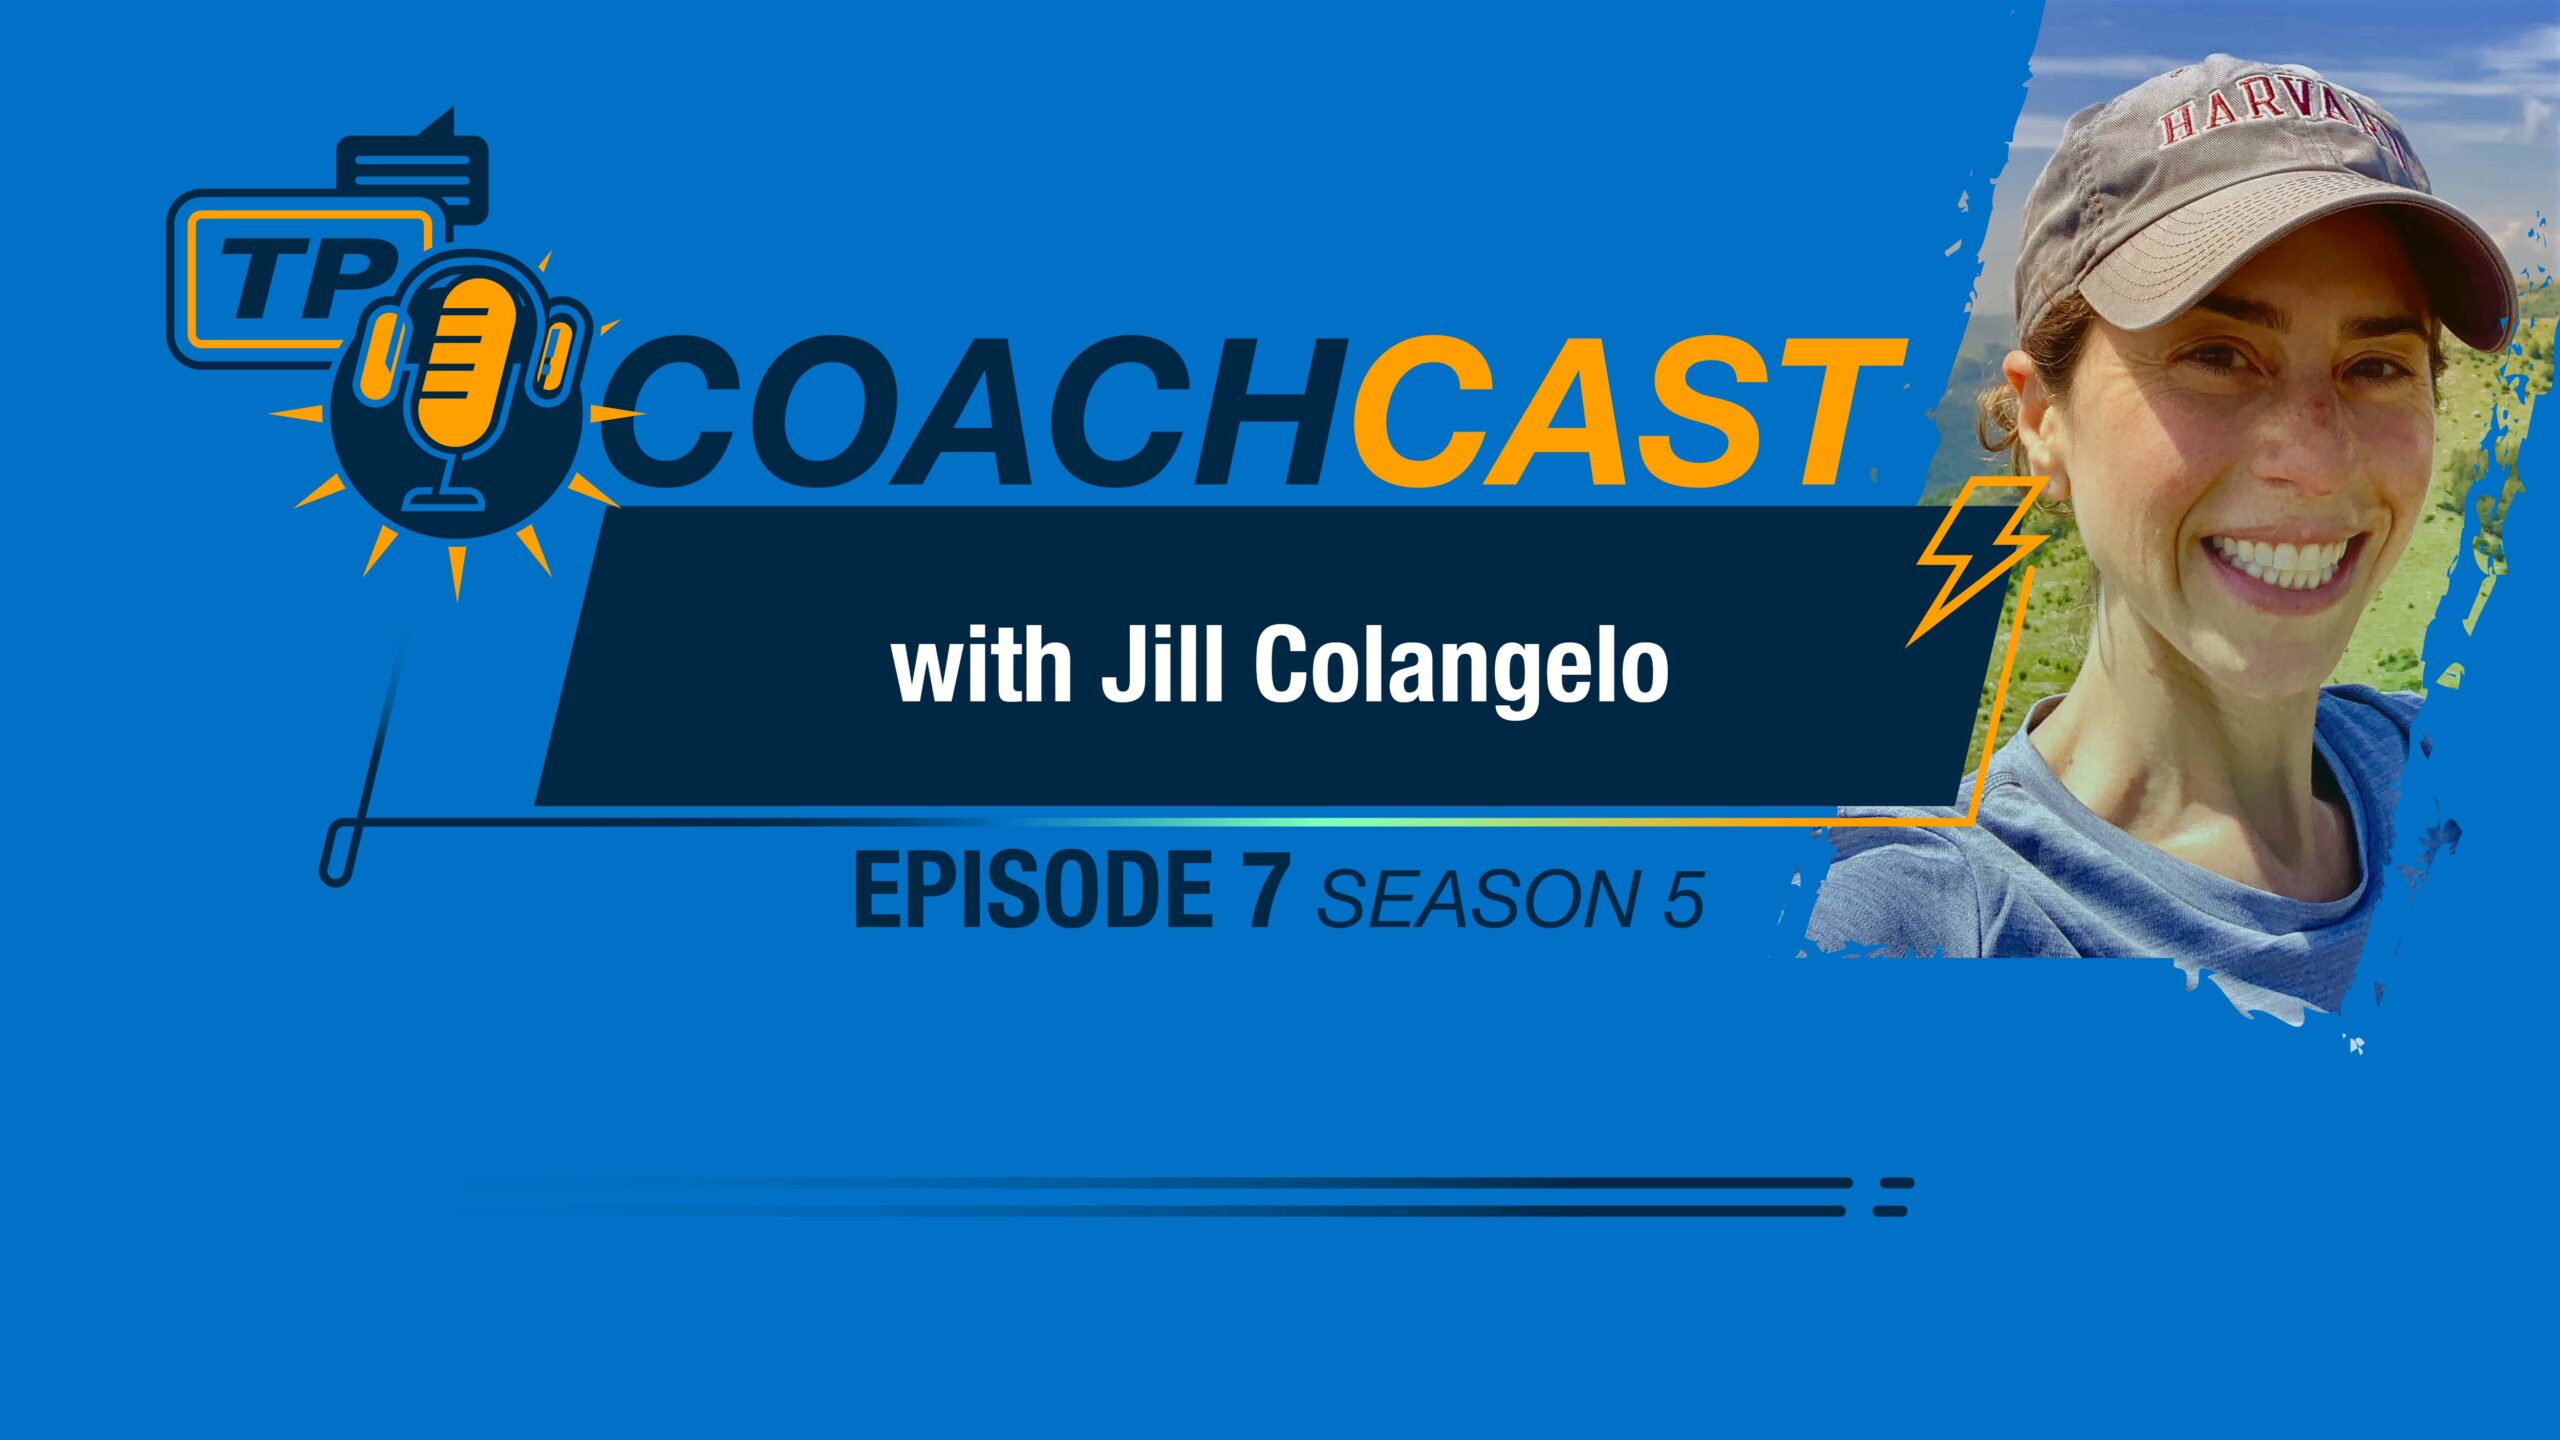 Researcher Jill Colangelo On The Trainingpeaks Coachcast